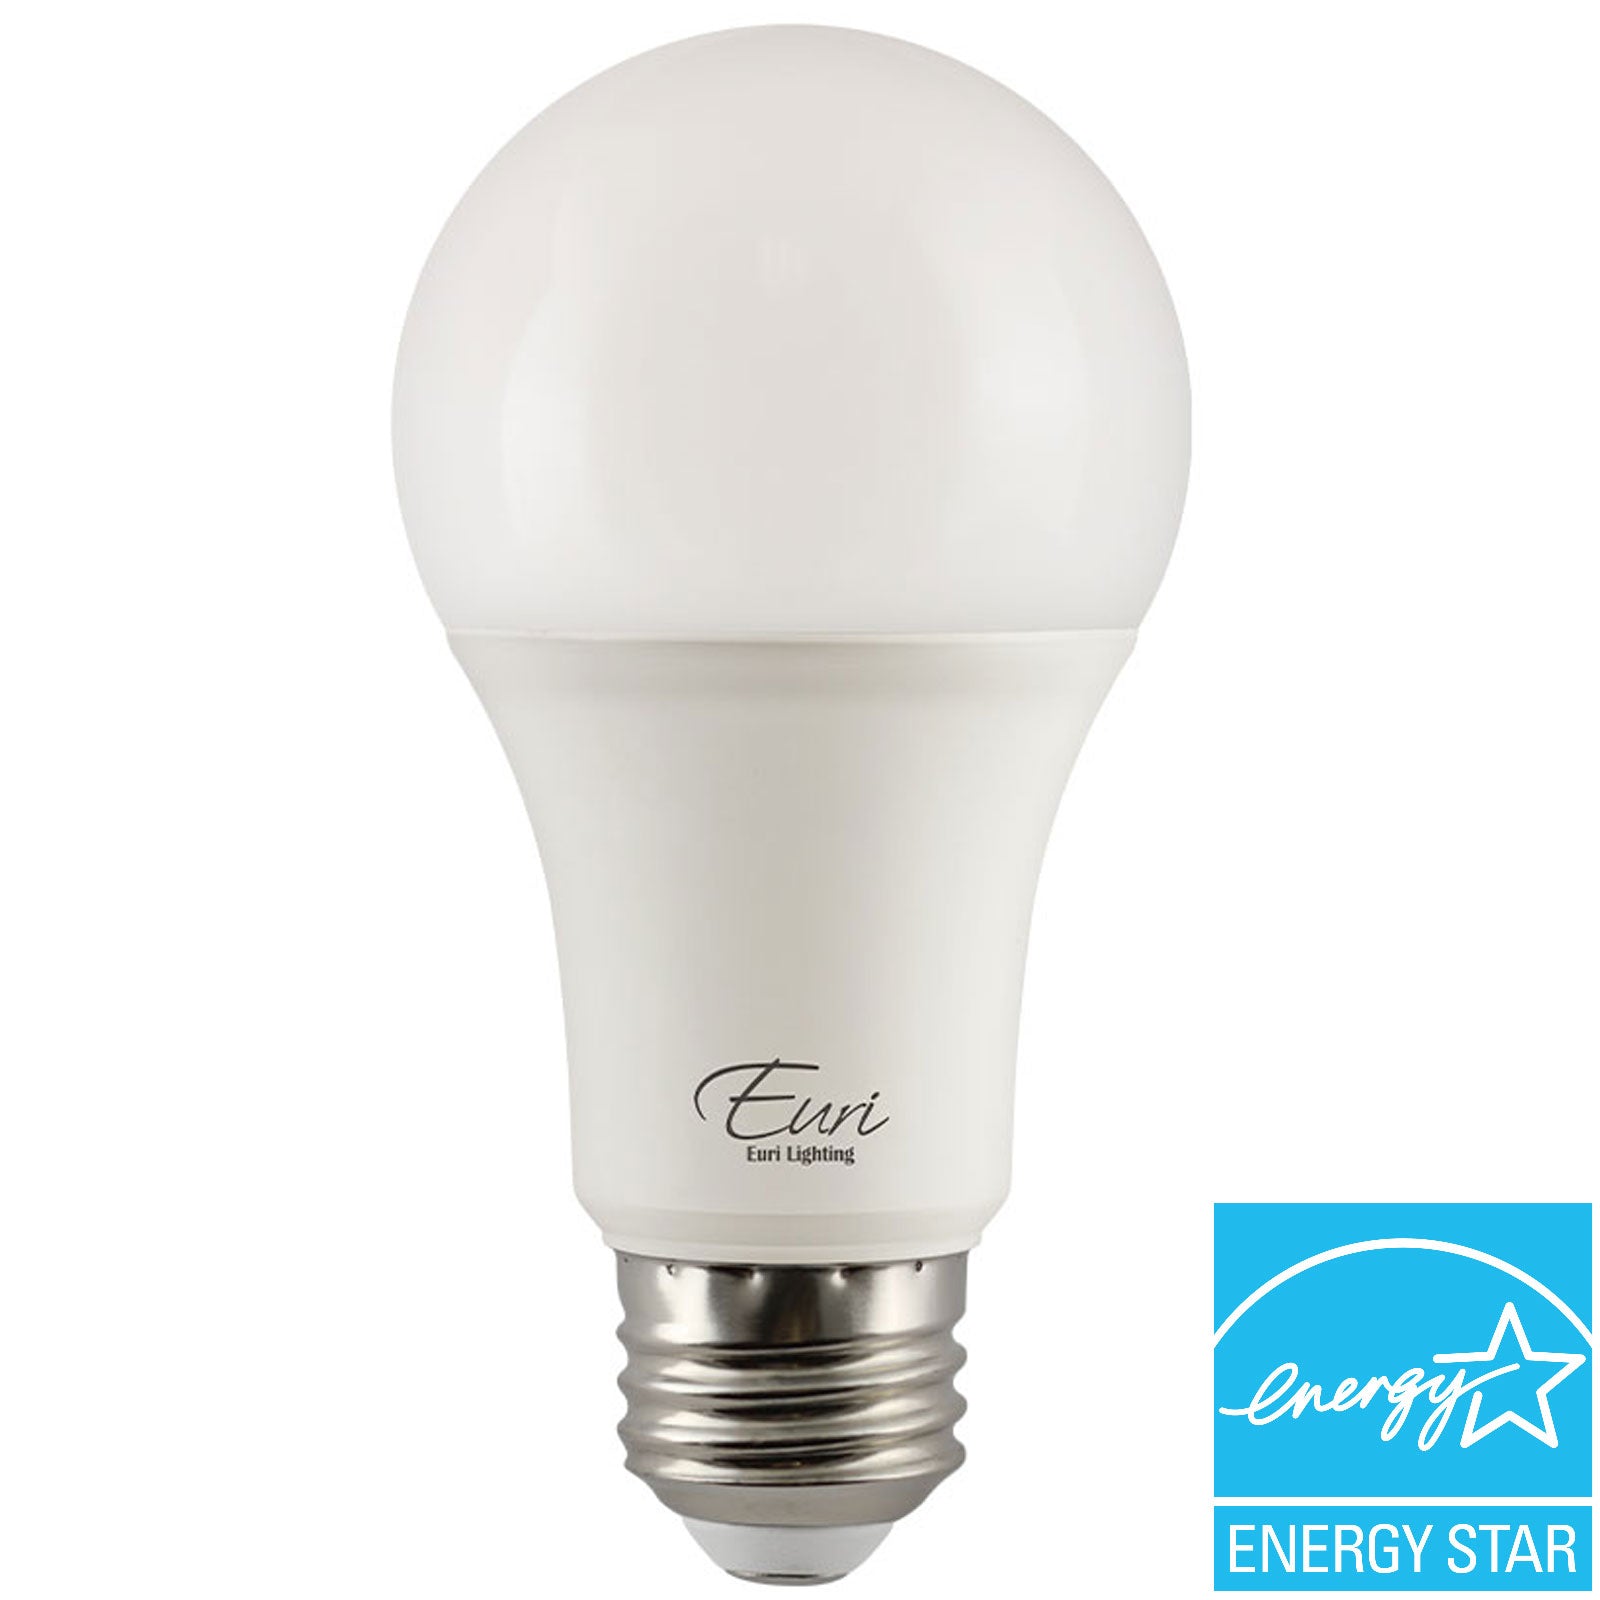  40-Watt Equivalent A19 E26 Dimmable General Purpose LED Light Bulb